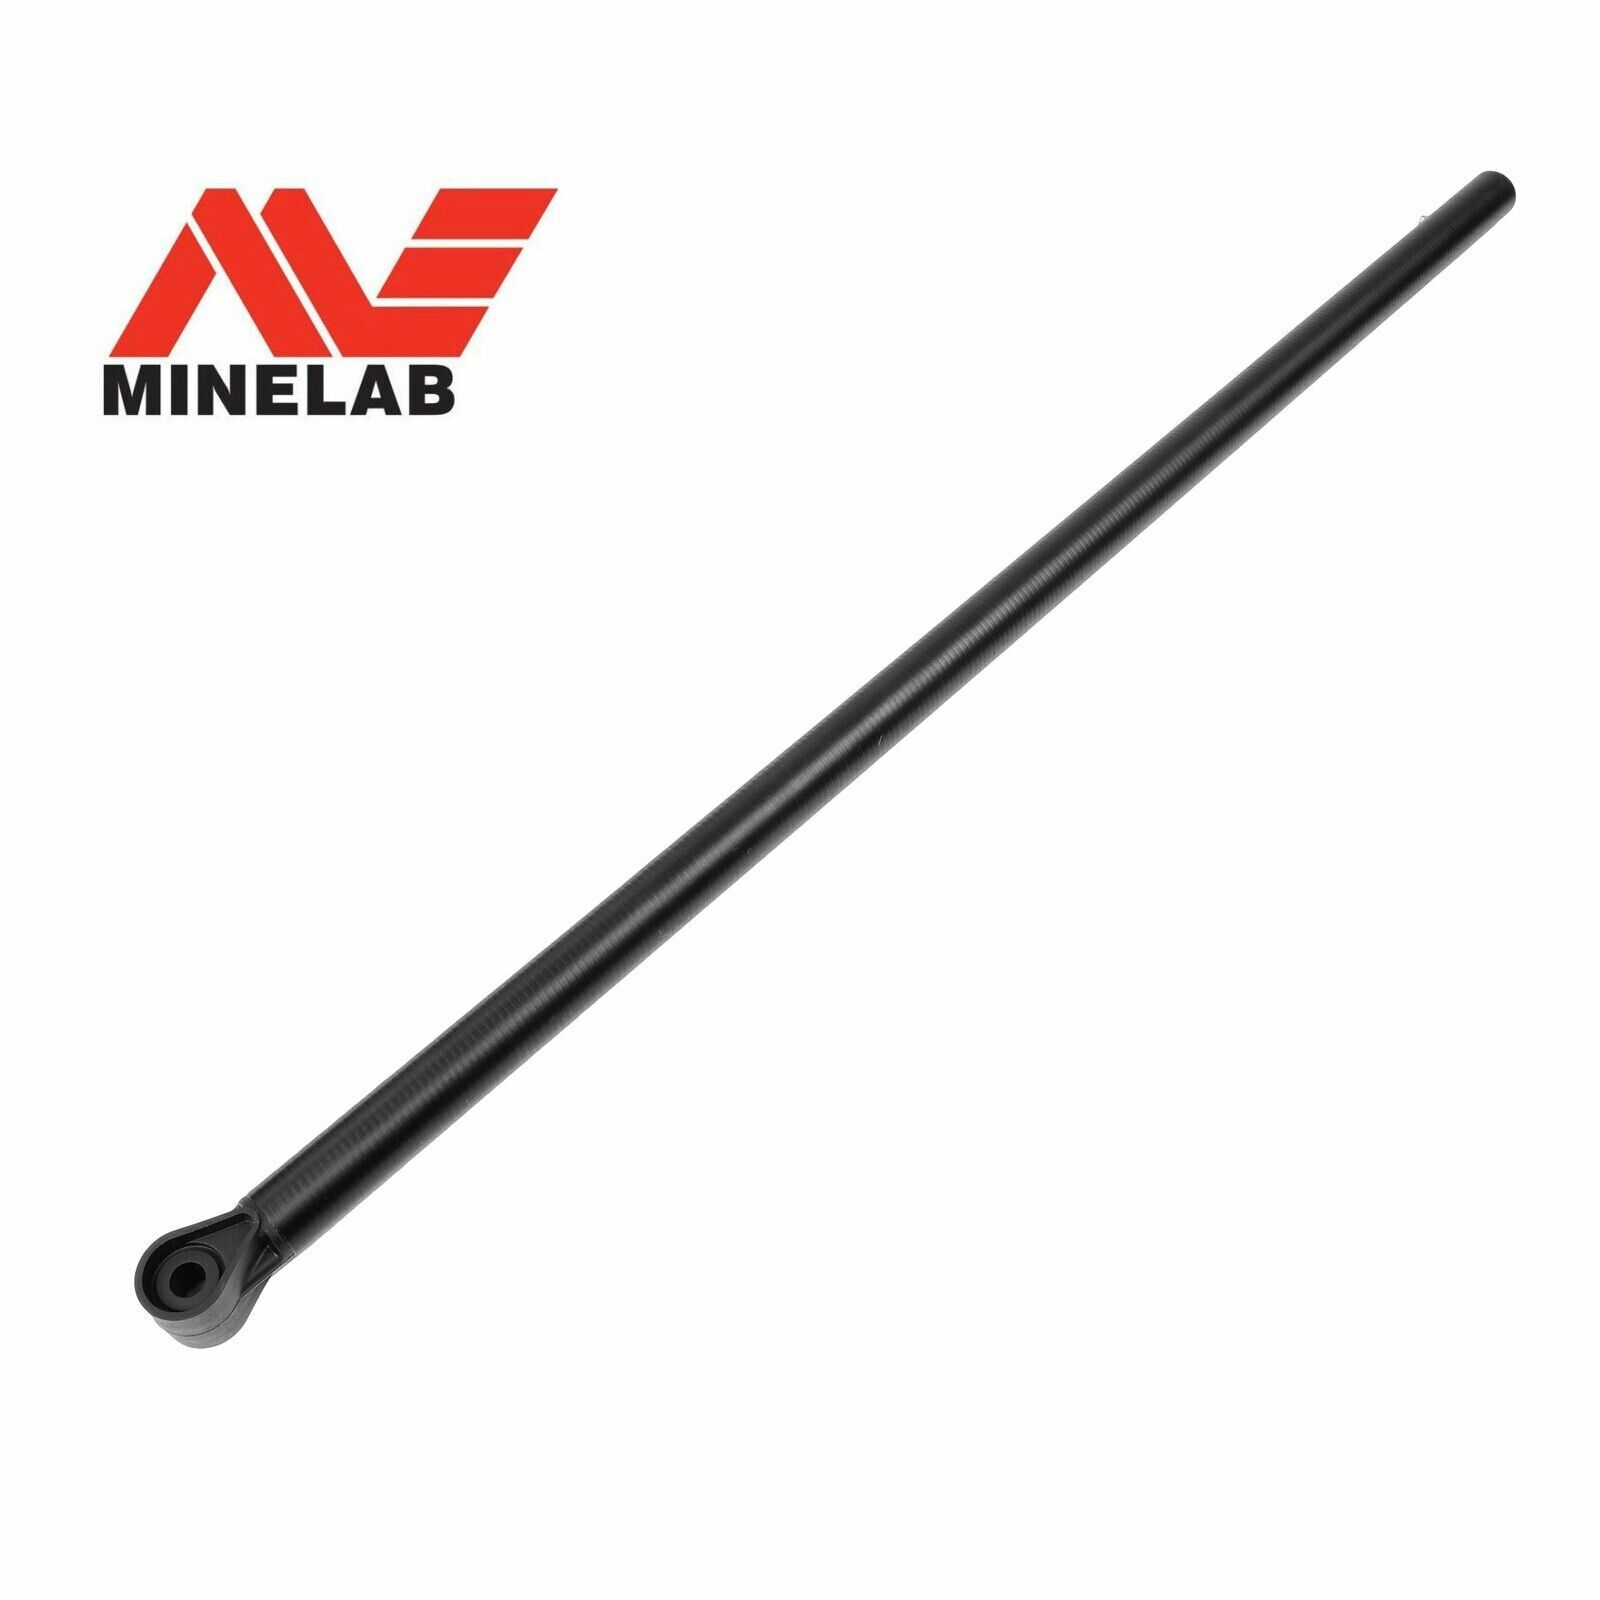 Genuine Minelab VANQUISH Series Lower Metal Detector Shaft Rod Part #3011-0419 